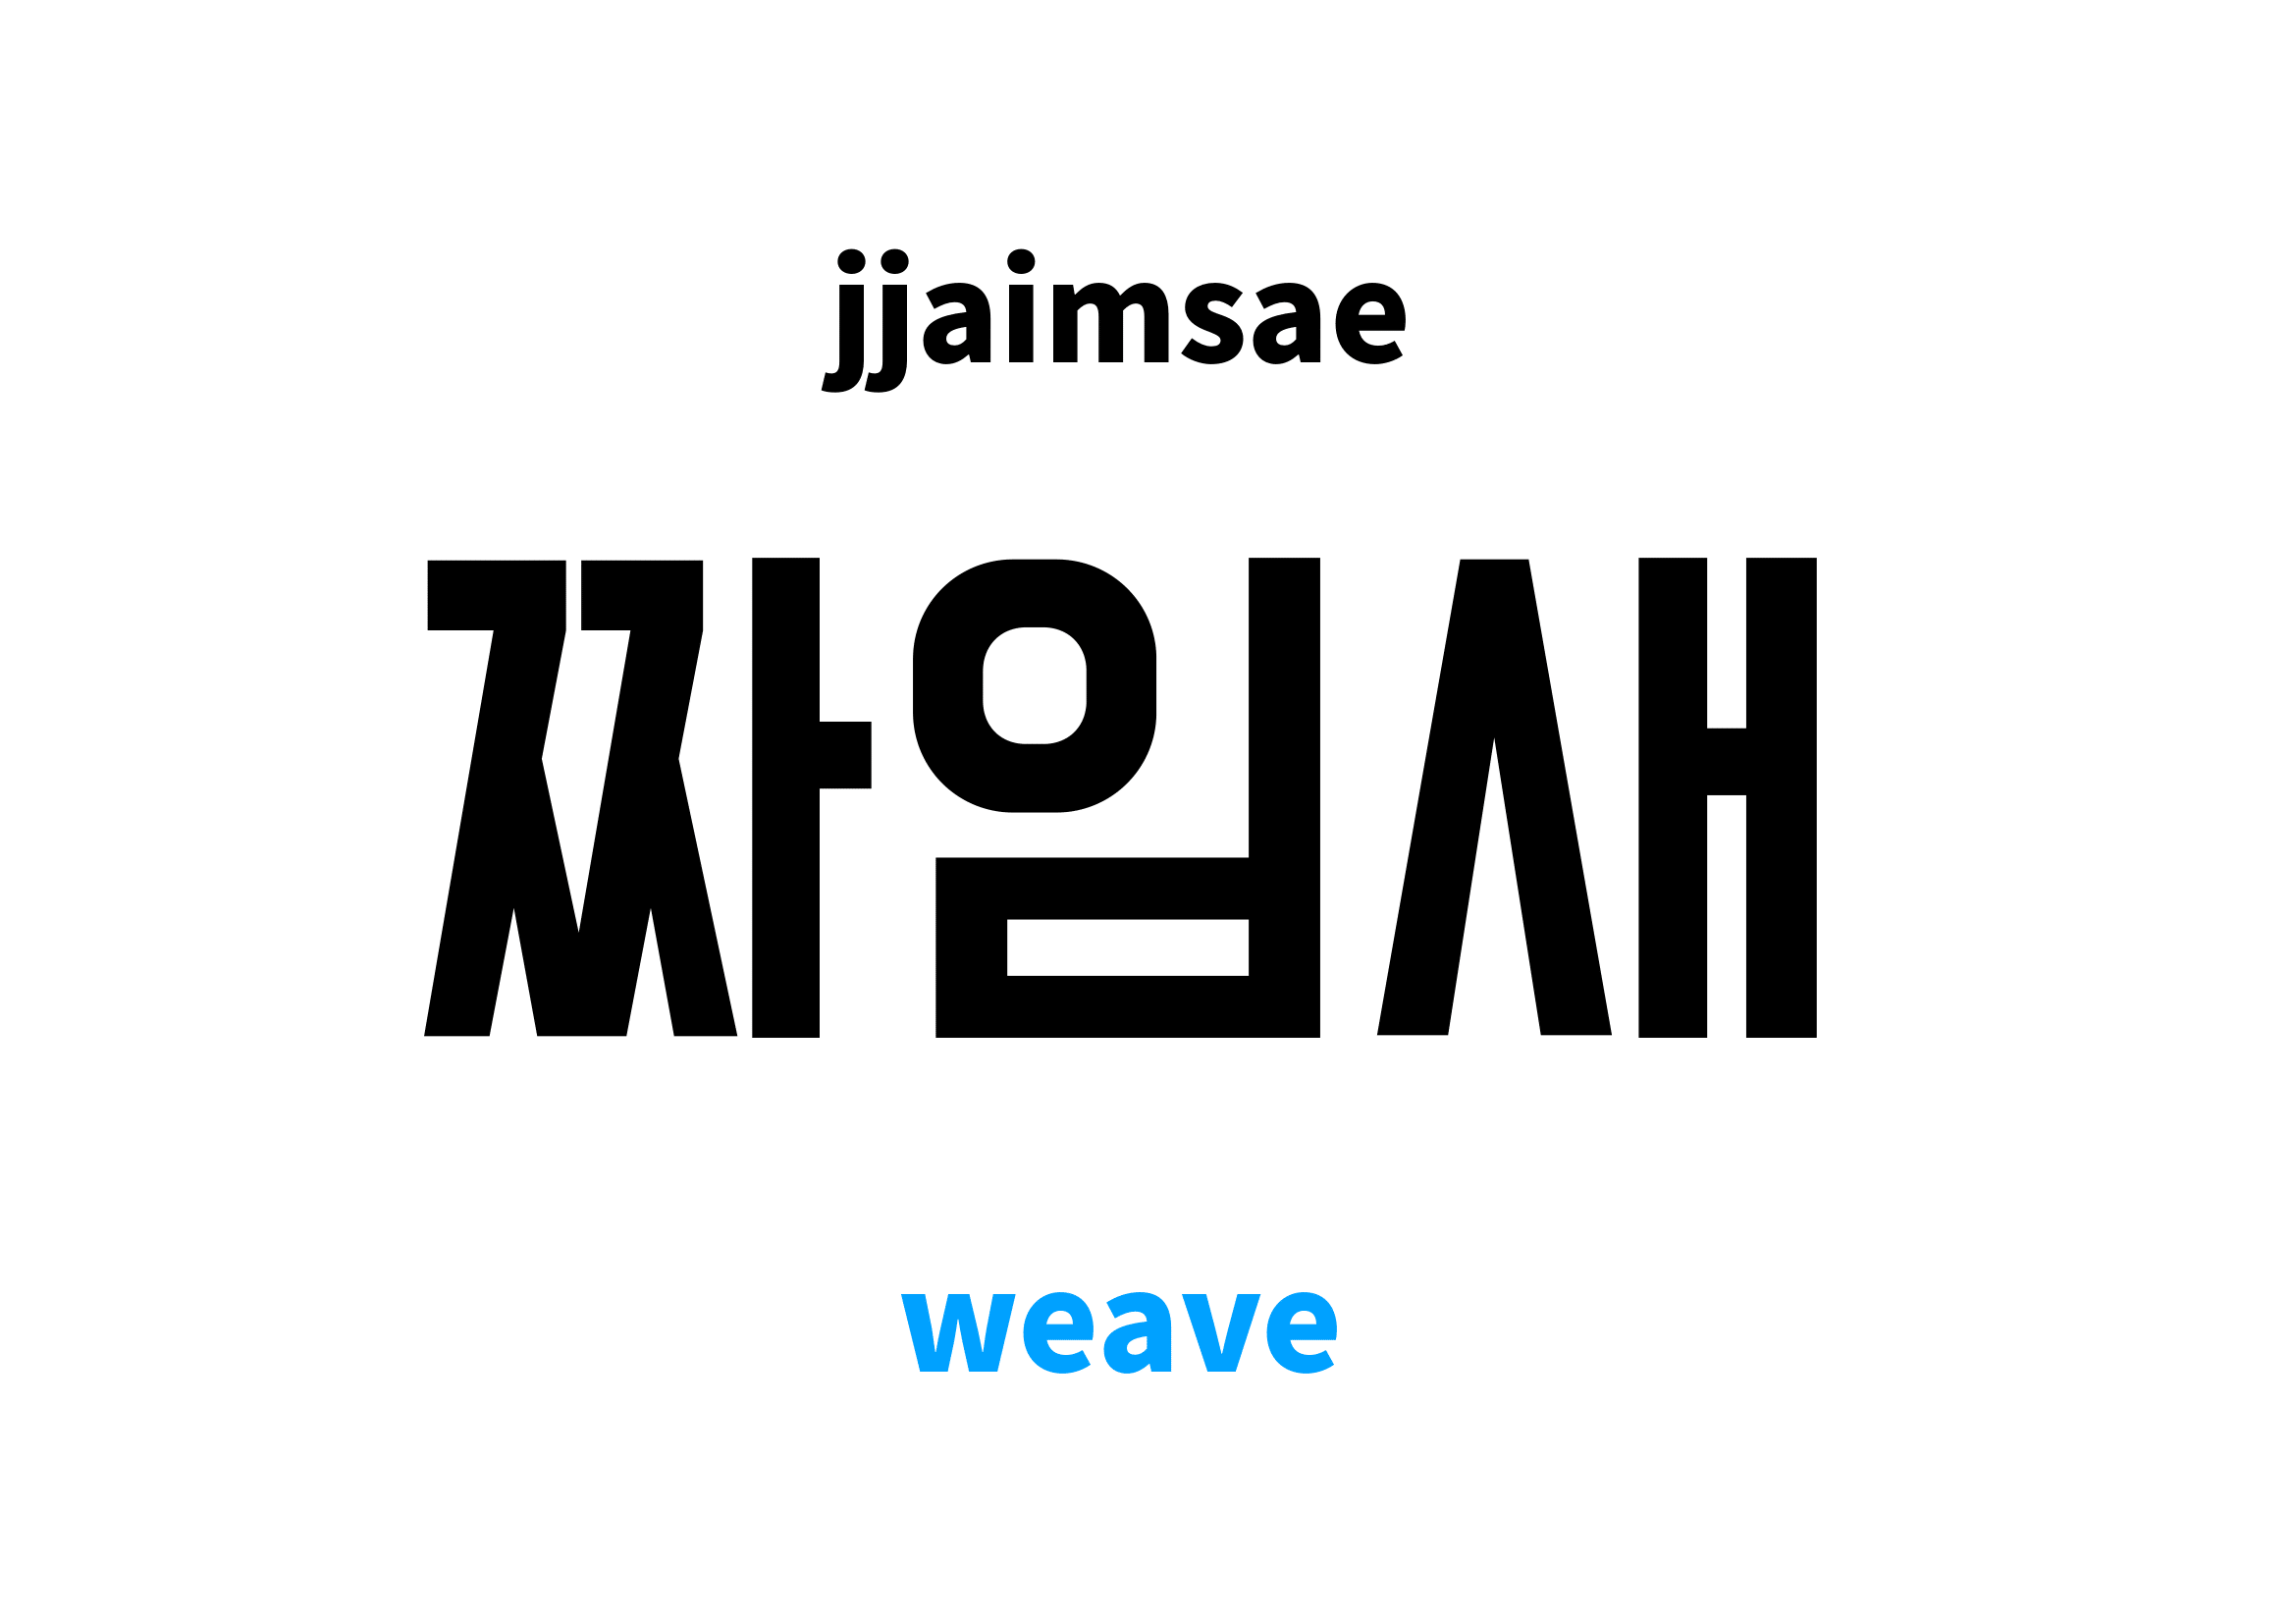 weave in Korean, 짜임새 meaning